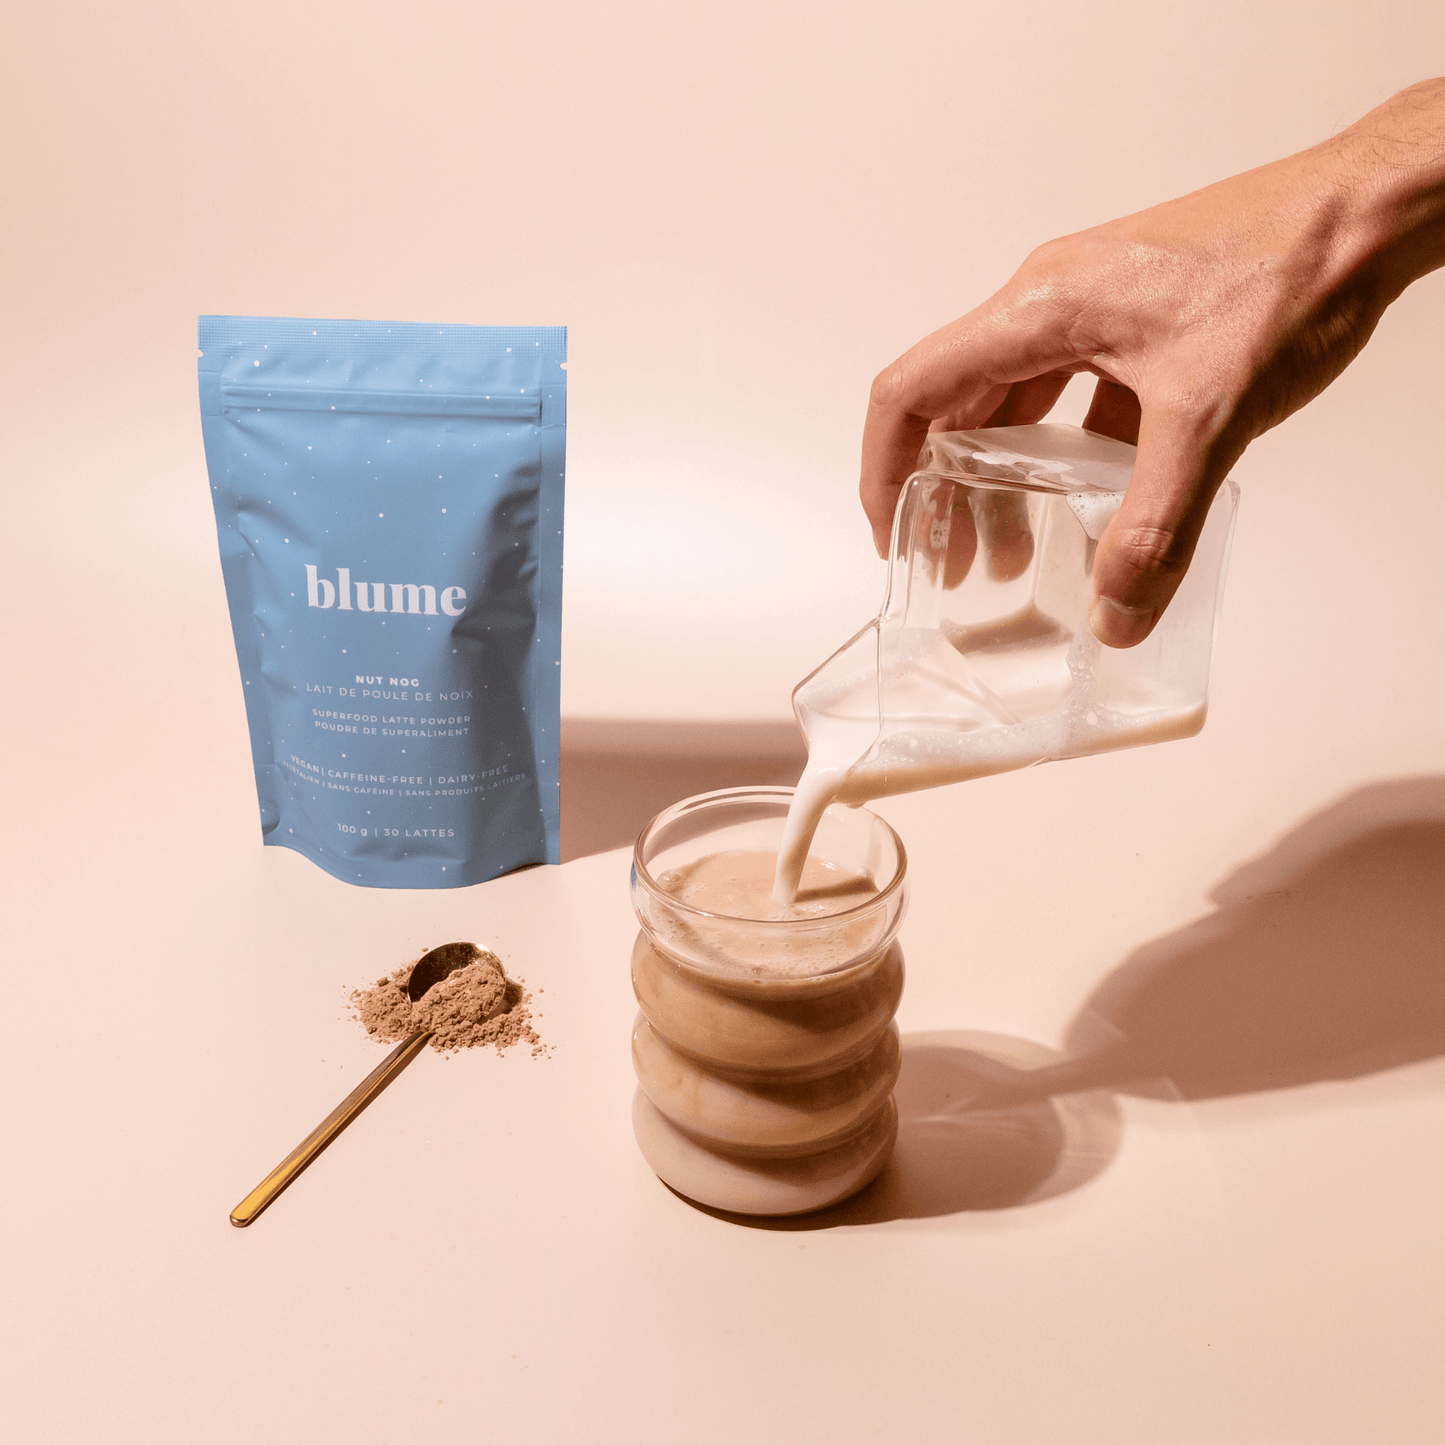 Superfood Latte Powder, Nut Nog - Echo Market